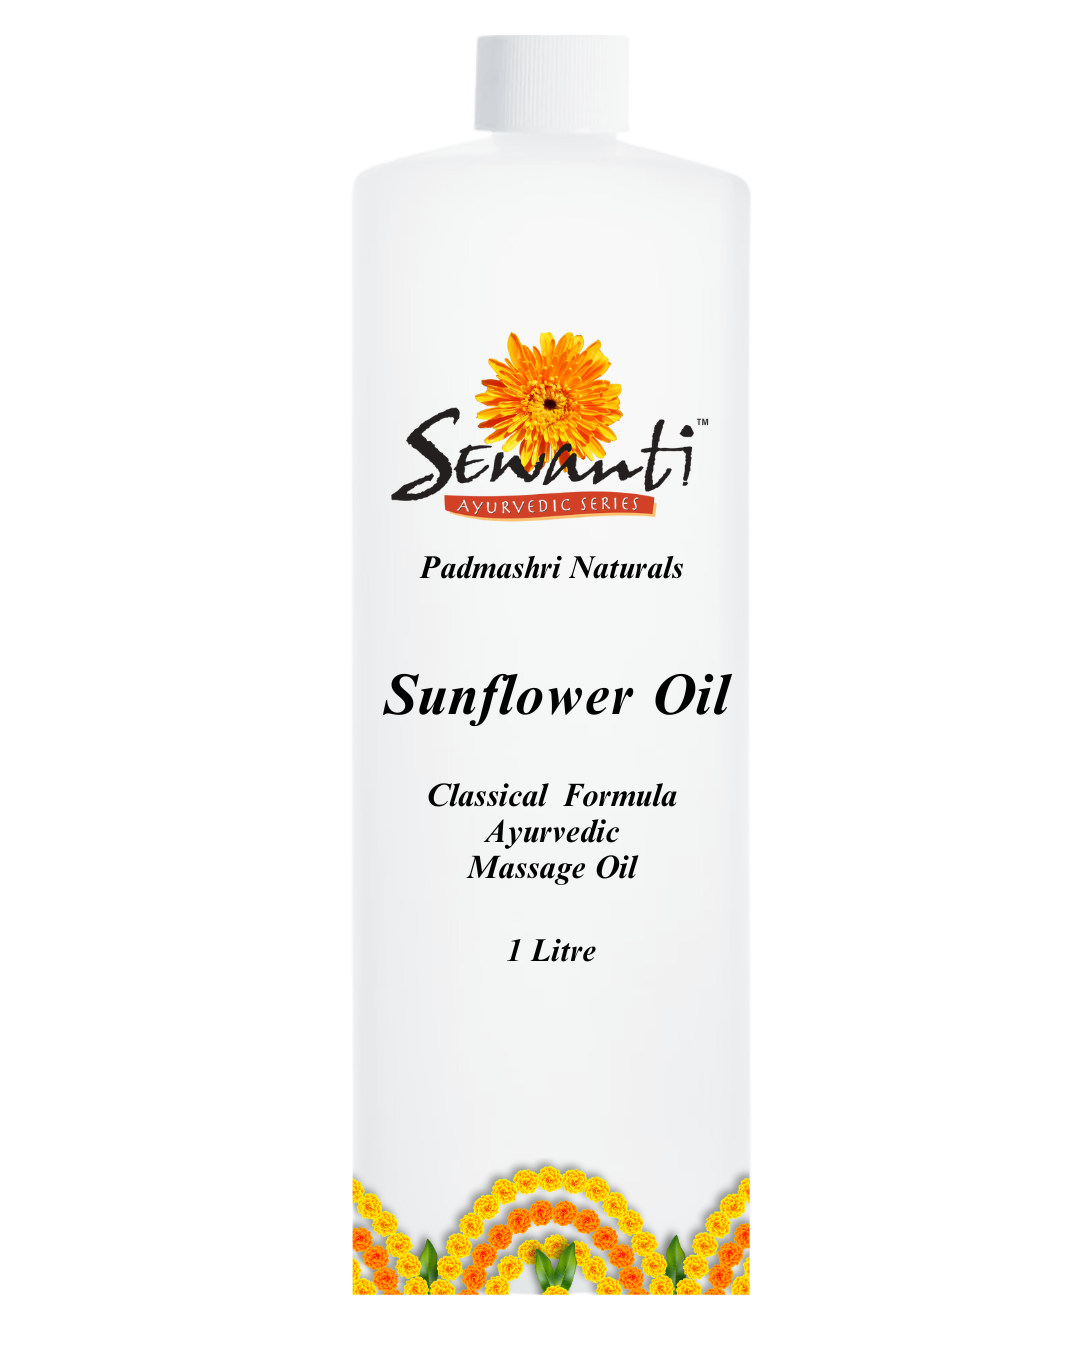 Ayurvedic Sunflower Oil